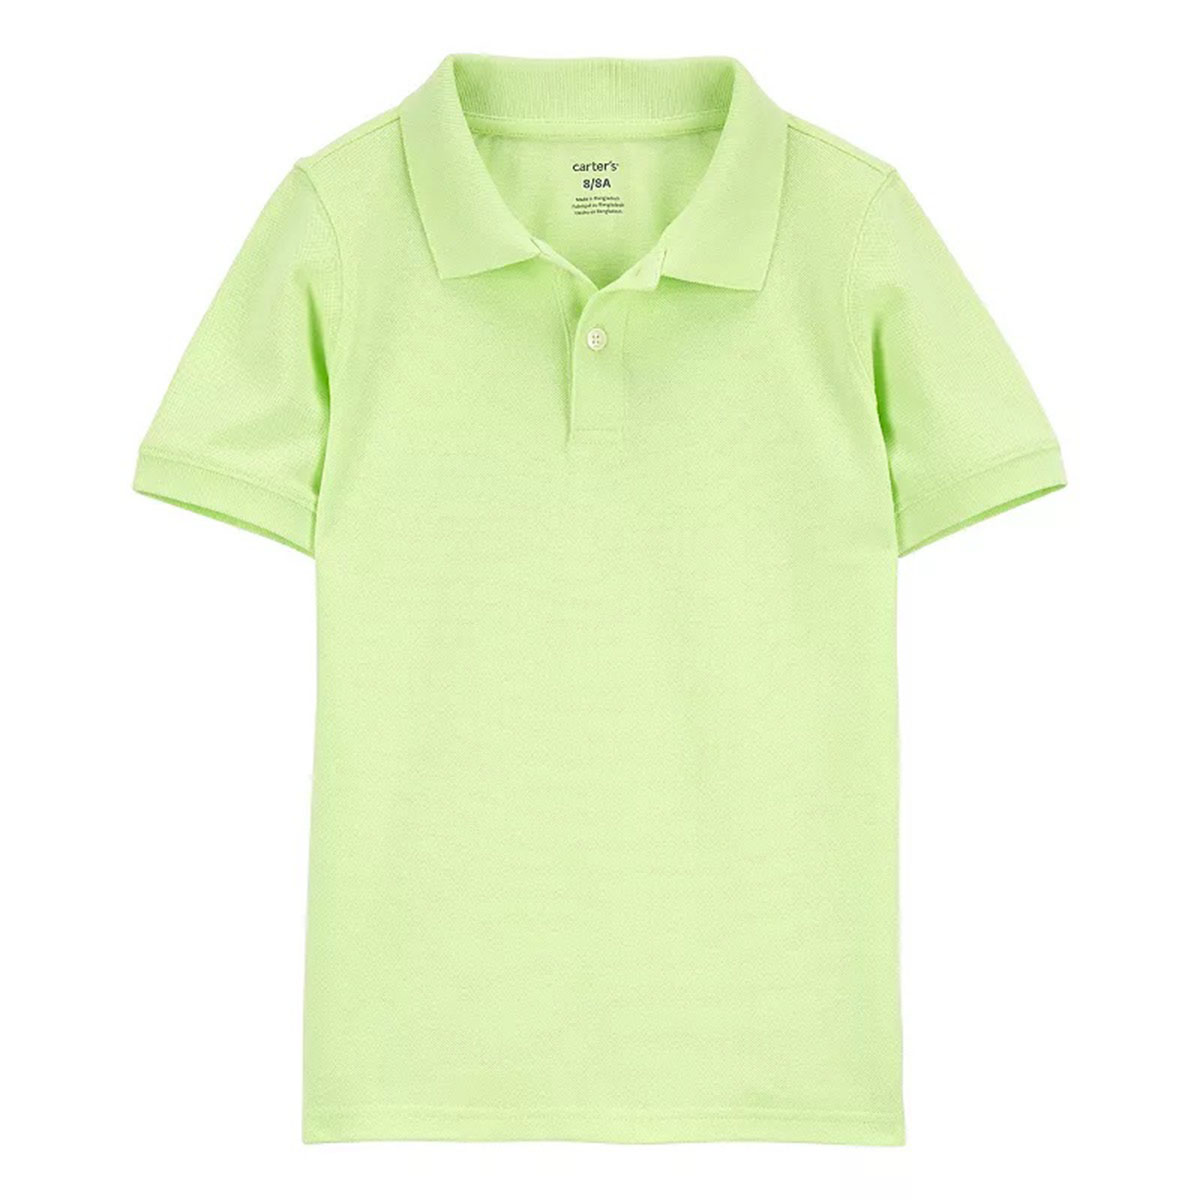 Boys (4-7) Carters(R) Short Sleeve Solid Polo - Green